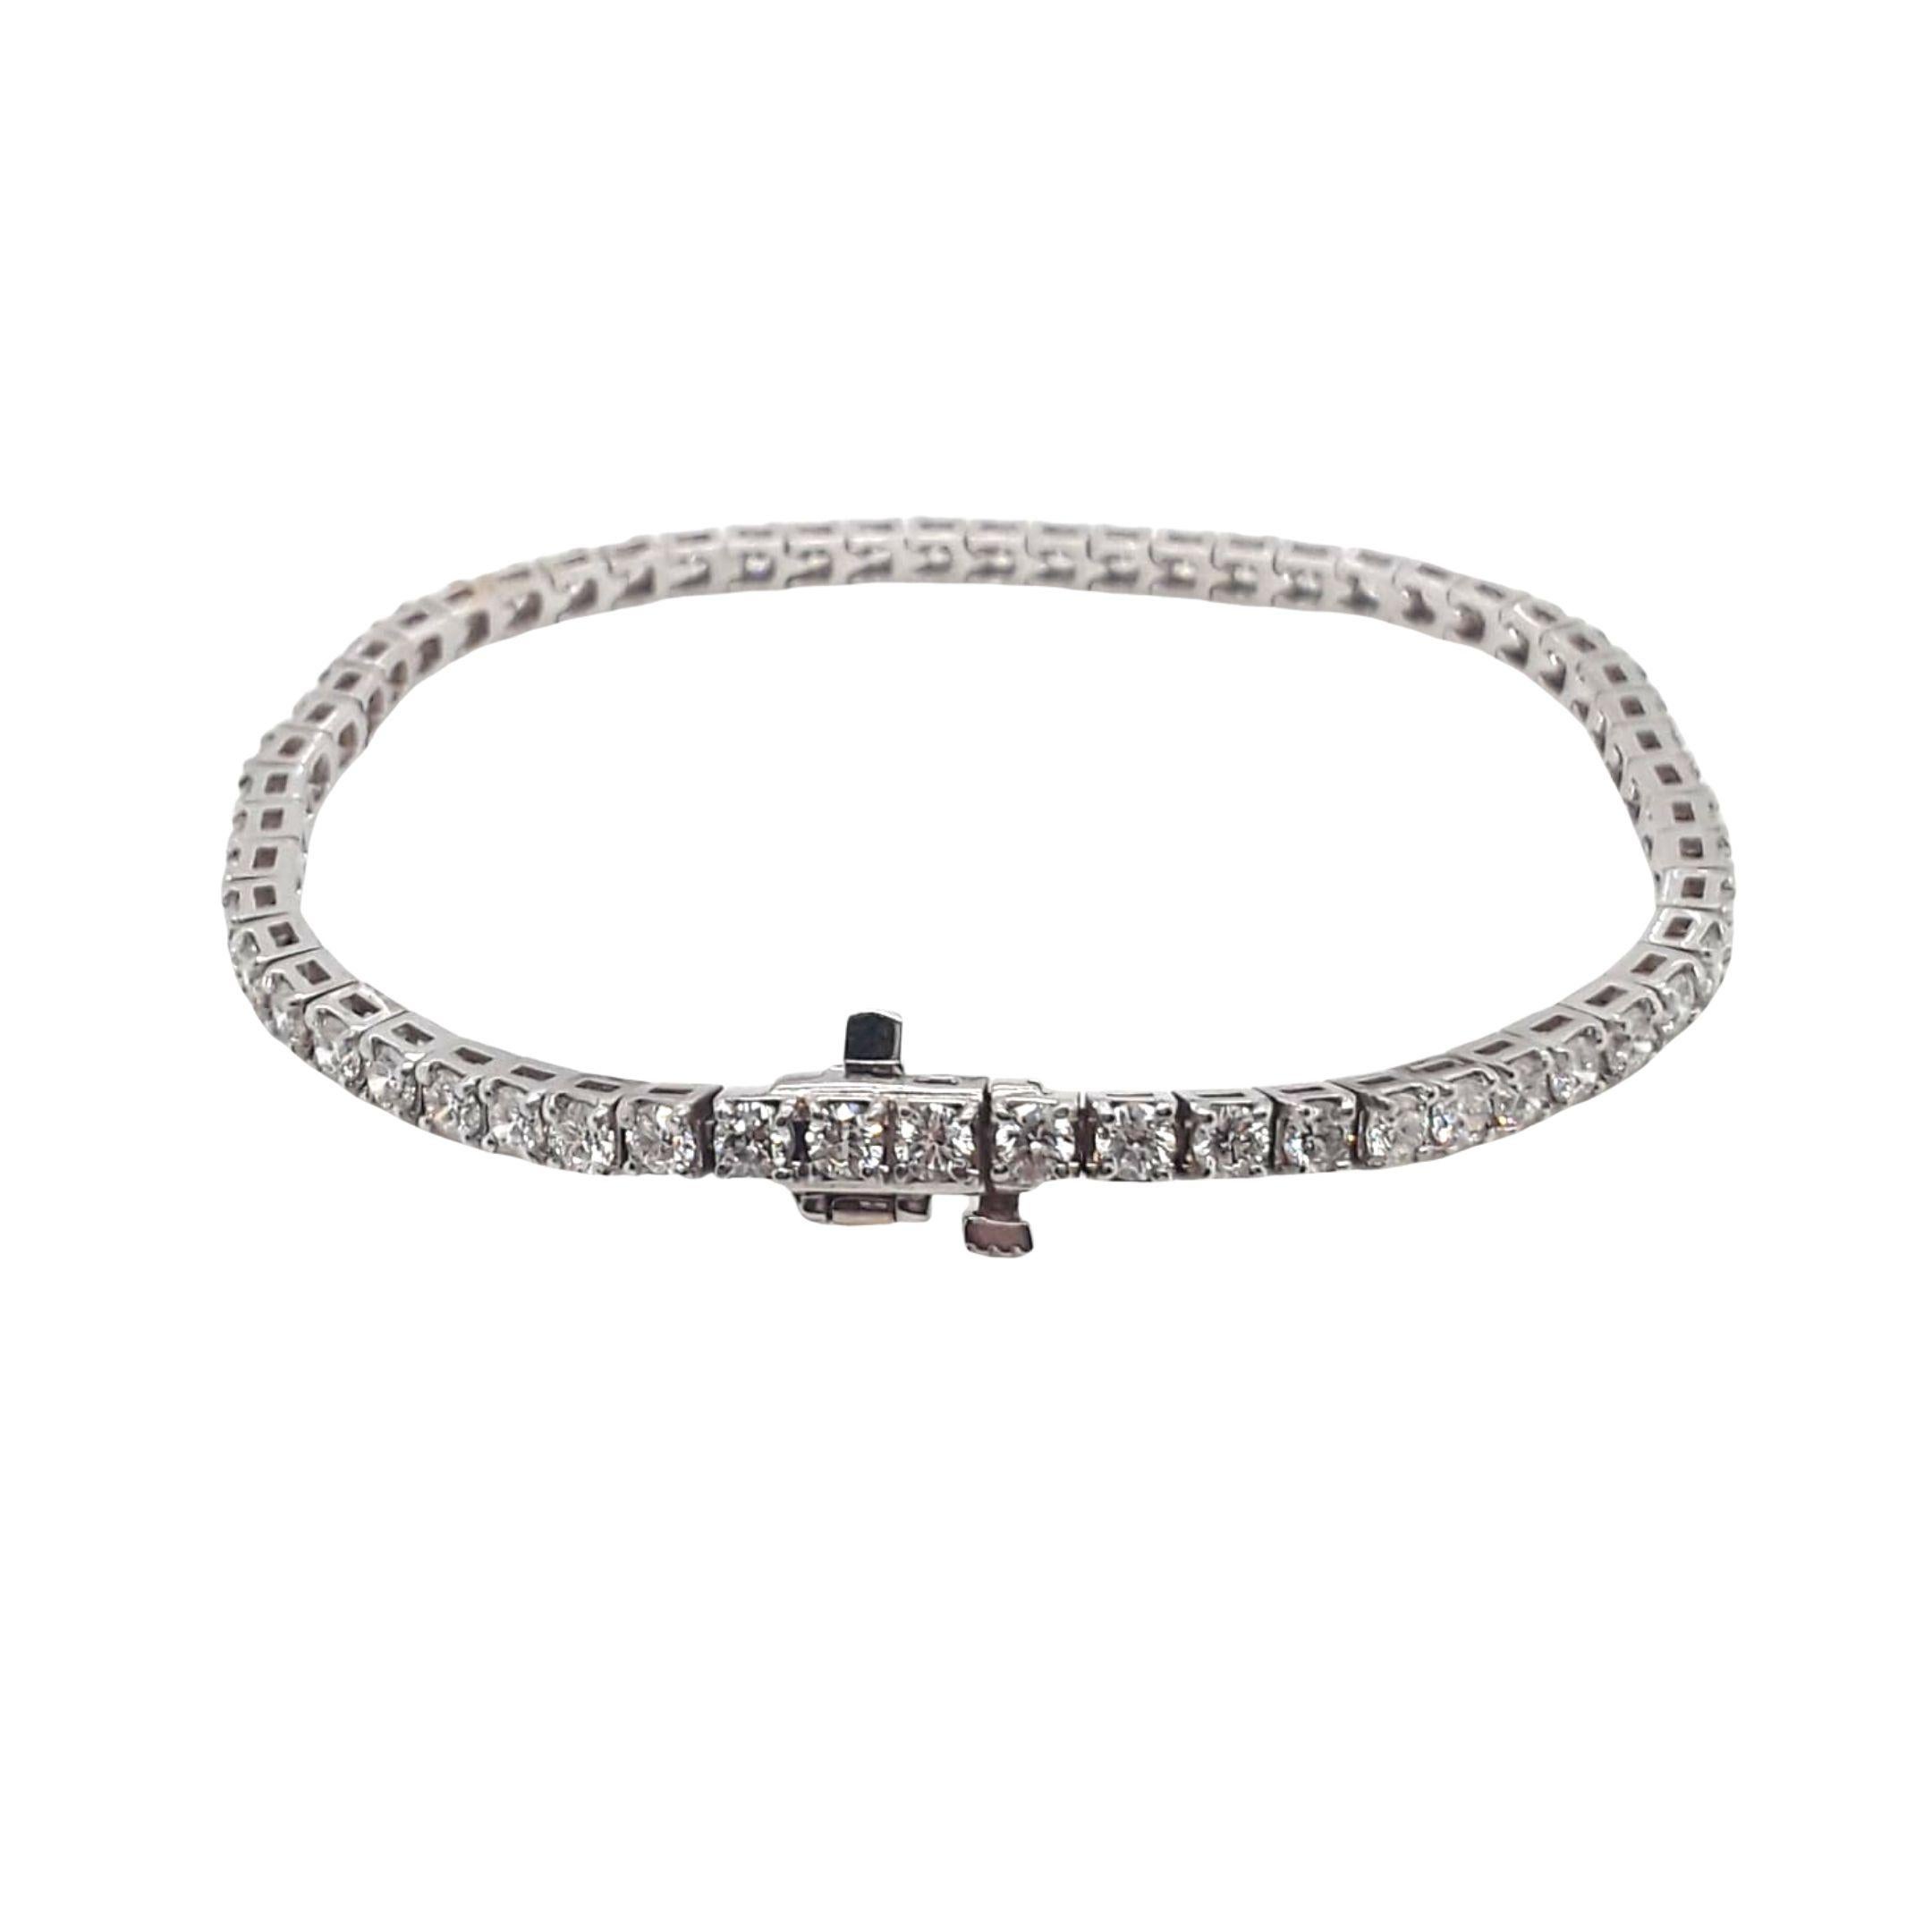 Diamond tennis/line bracelet made with real/natural brilliant cut diamonds. Diamond Weight: 4.11 carats, Diamond Quantity: 58 (round diamonds), Color: G-H, Clarity: VS1-VS2. Mounted on 18 karat white gold.